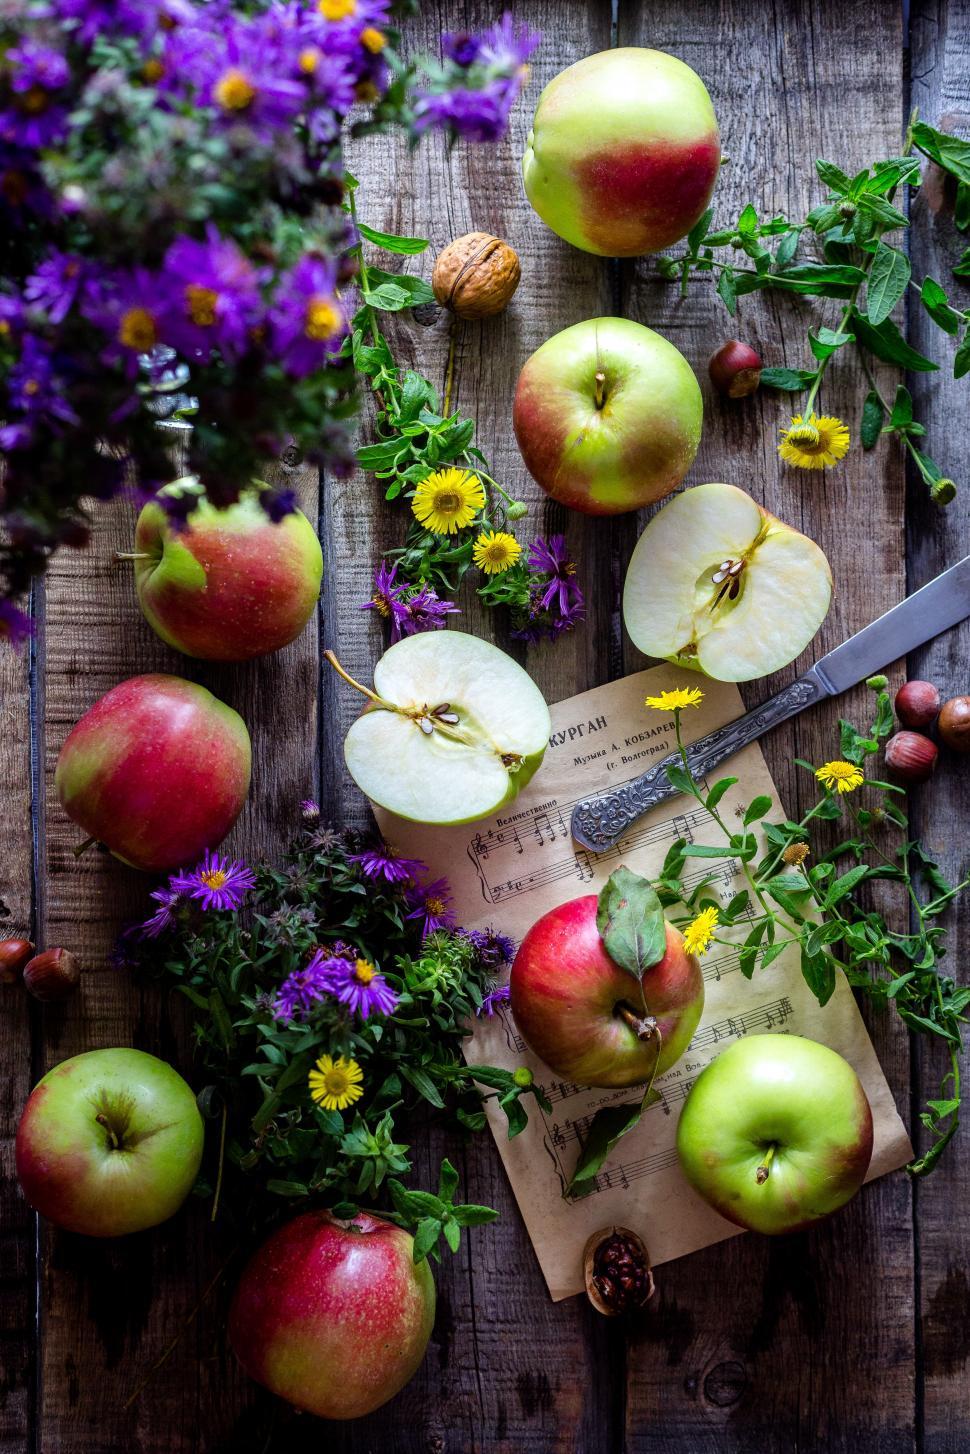 Free Image of Apples on Wooden Desk 